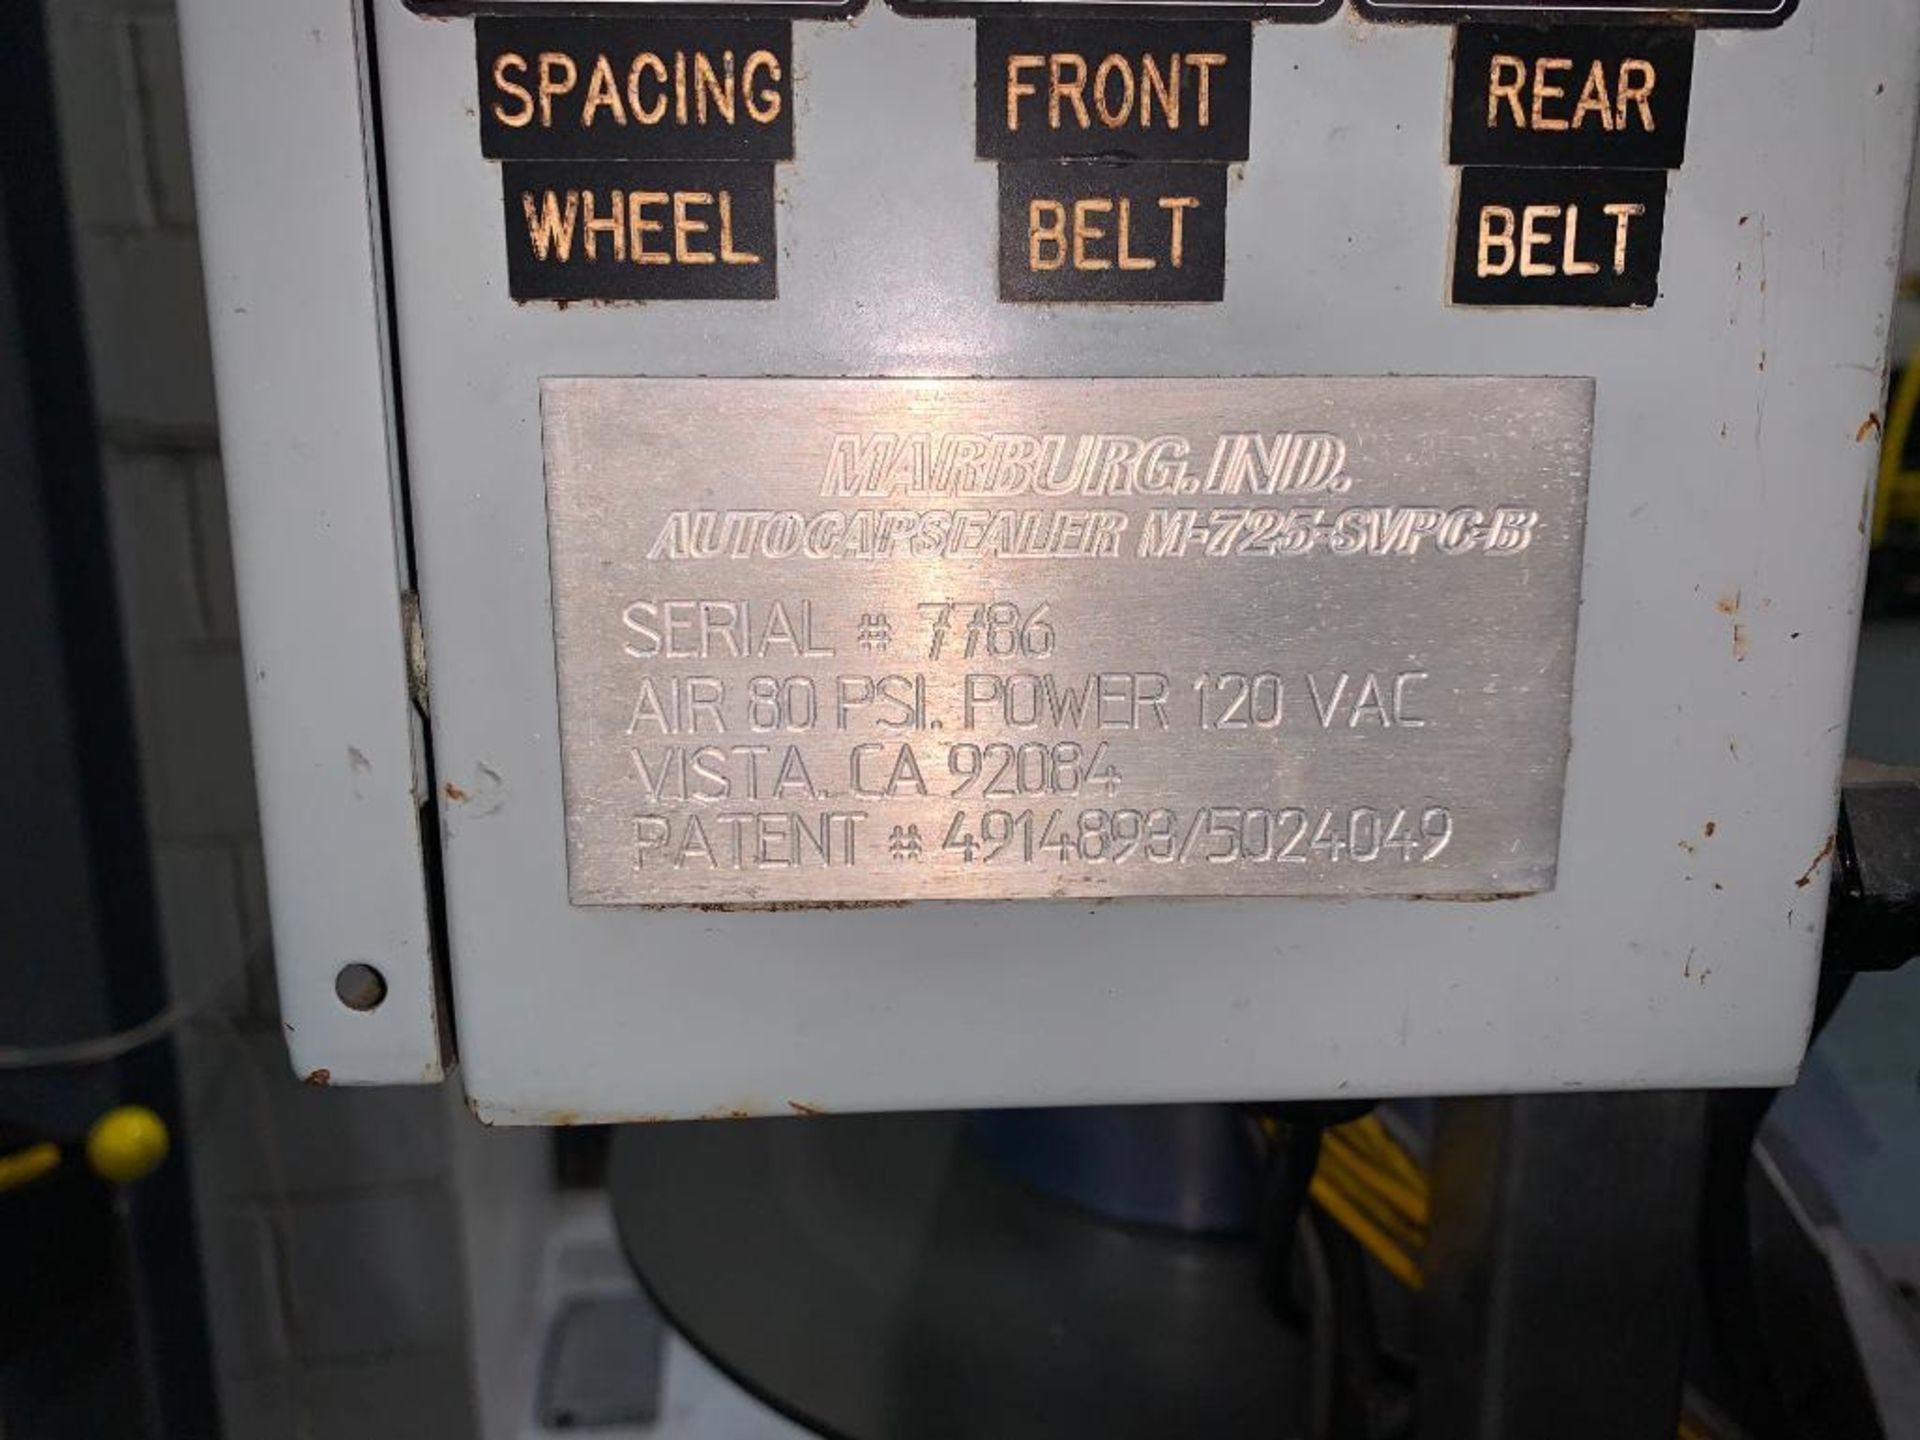 Marburg auto cap sealer, sn 7786 - Image 3 of 13